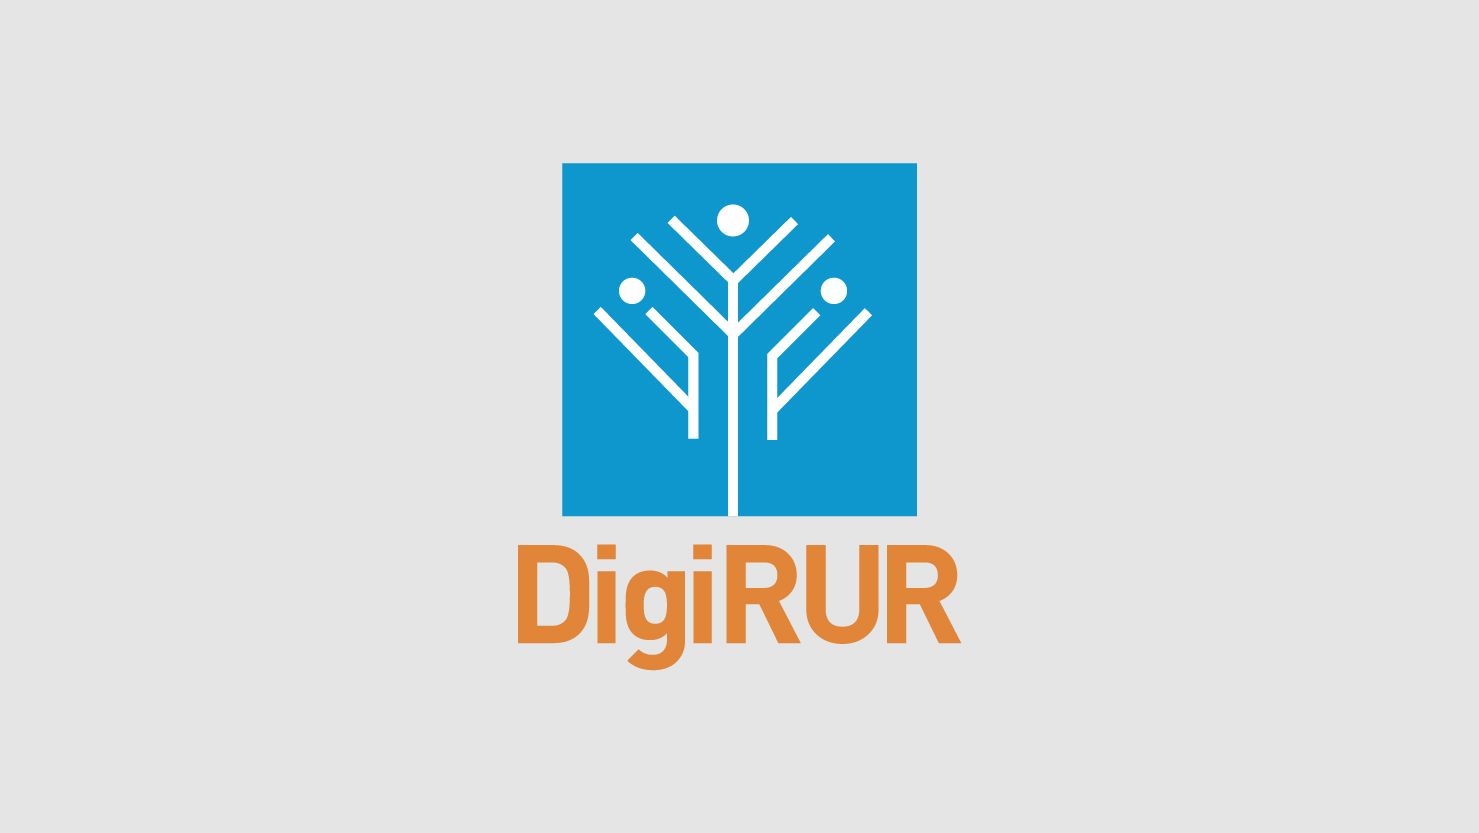 DigiRUR: Stay rural and successful in the digital era